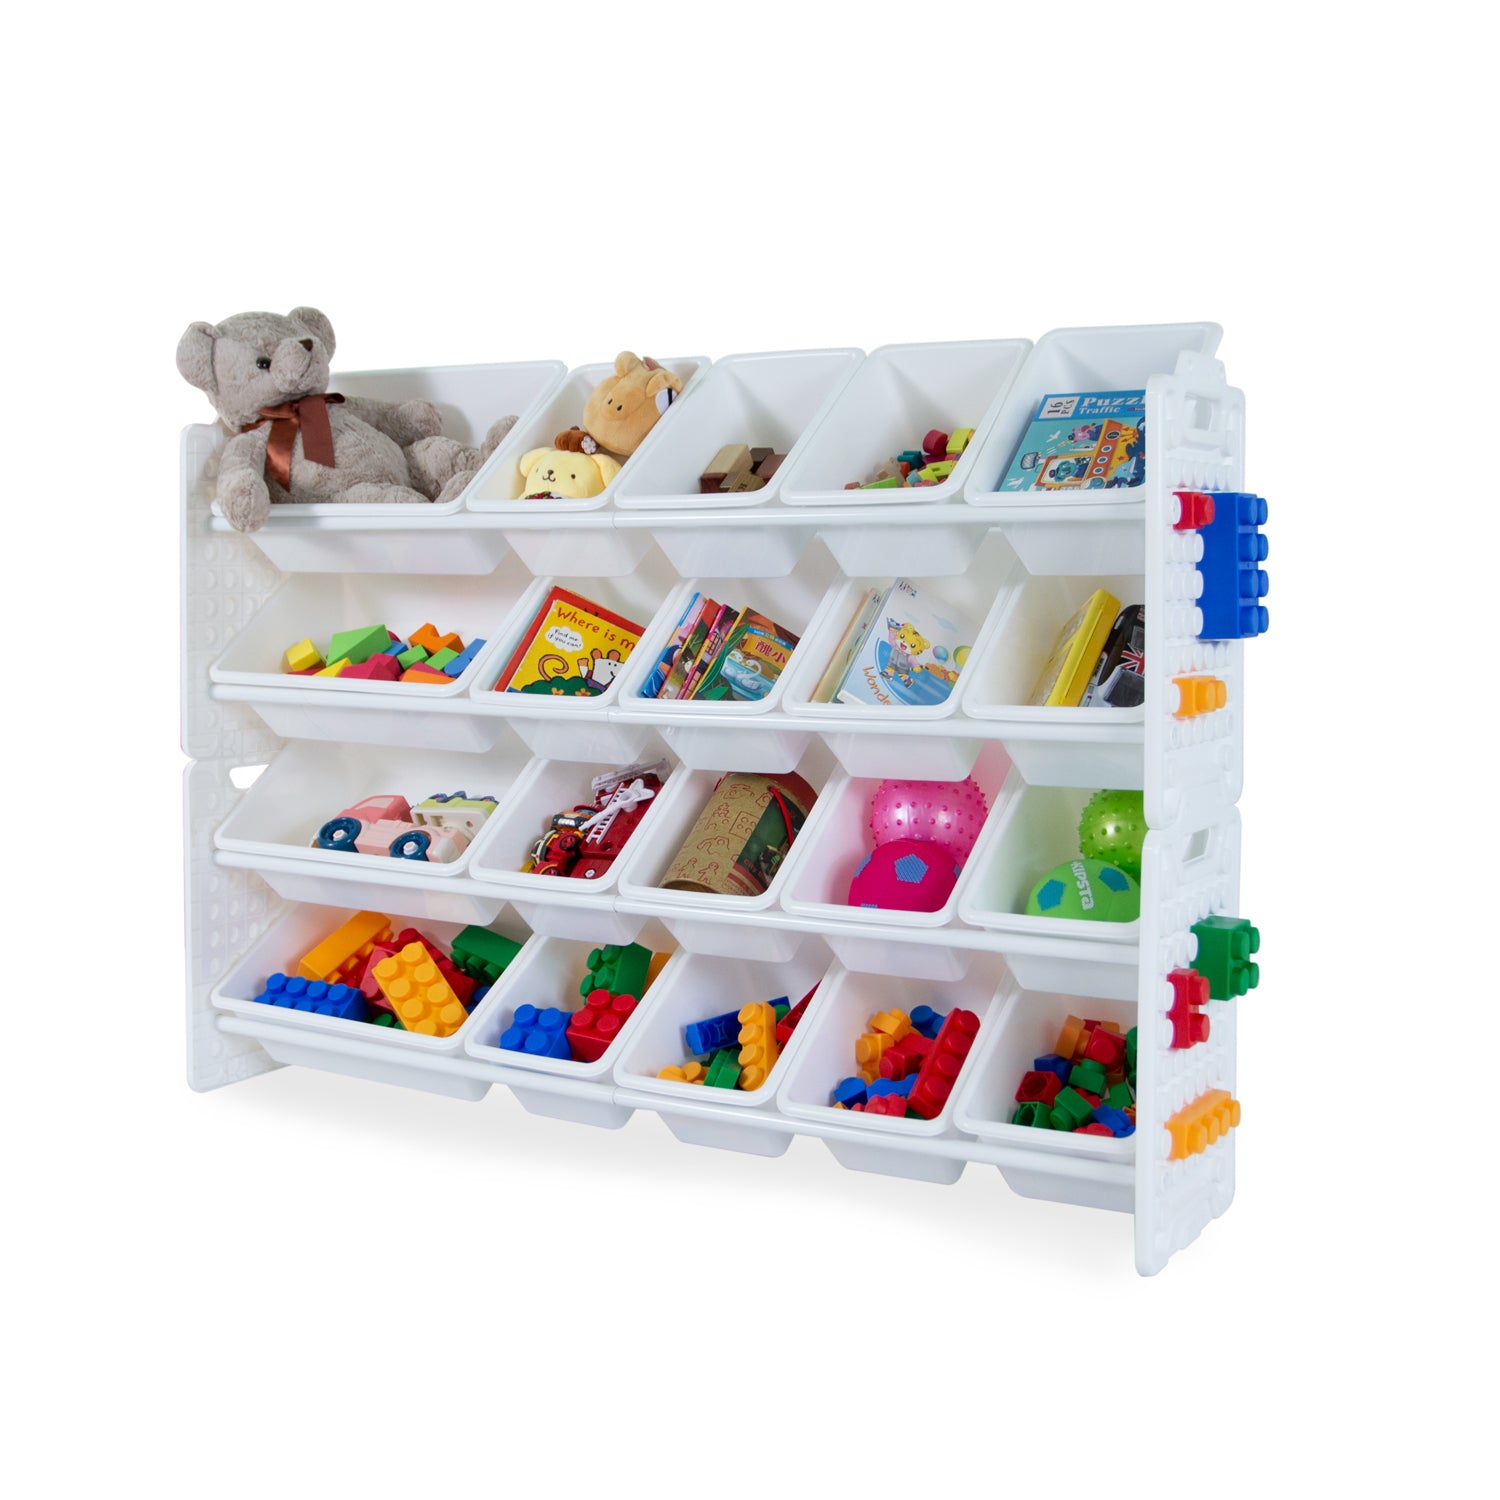 UNiPLAY 20 Bins Toy Storage Organizer - White (UB45811)